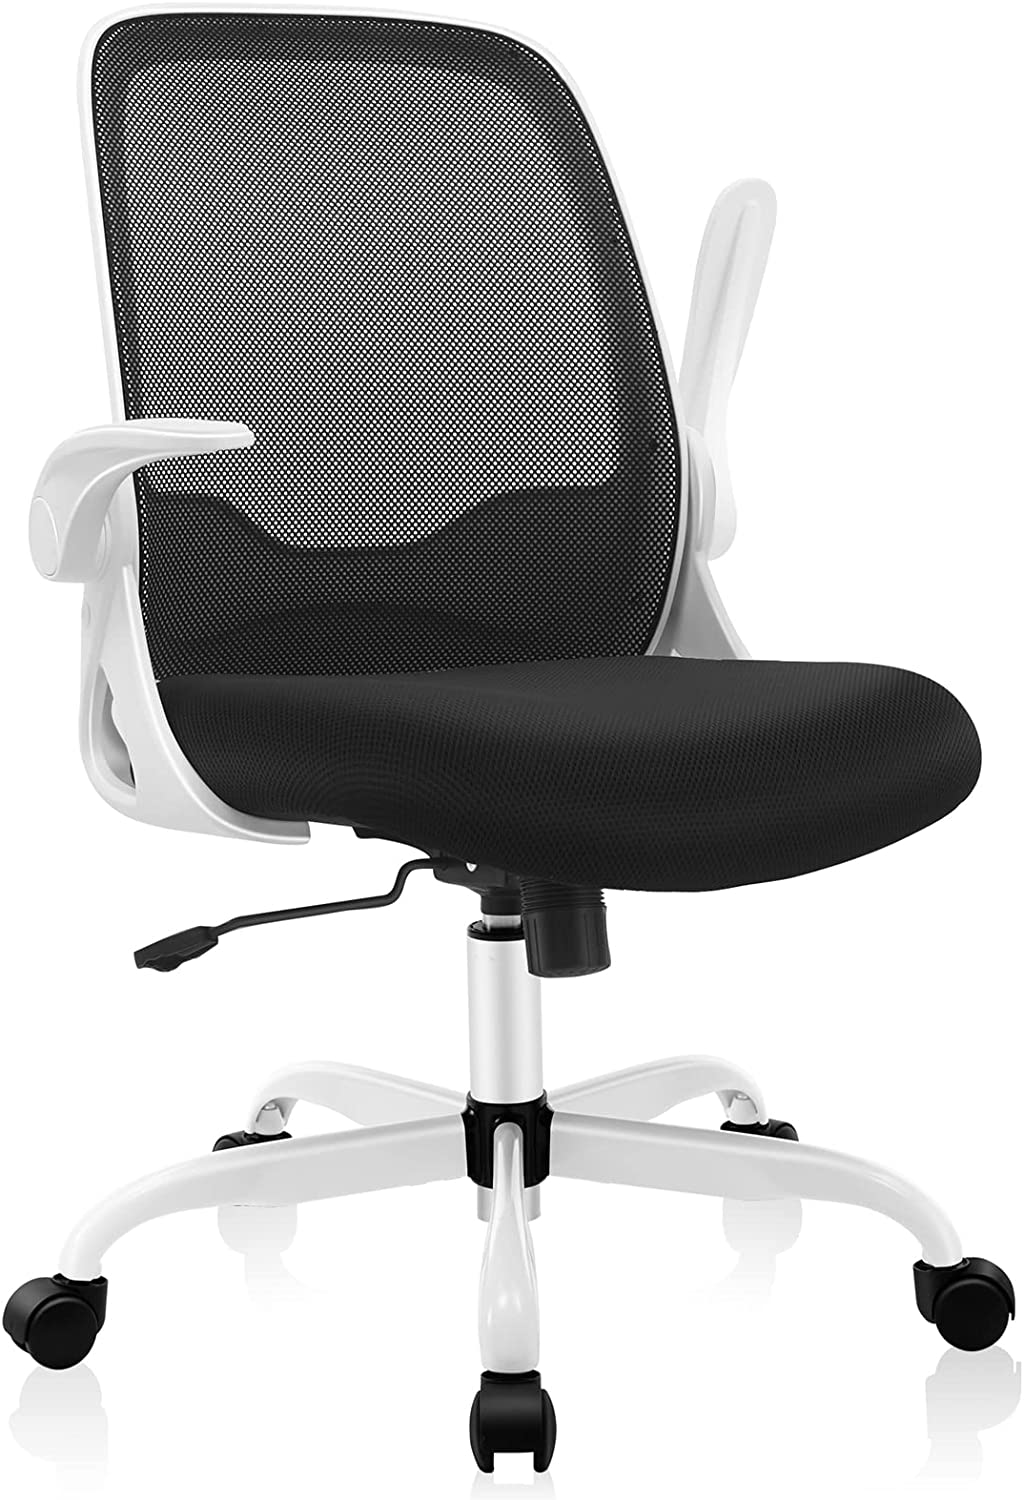 KERDOM Ergonomic Desk Chair